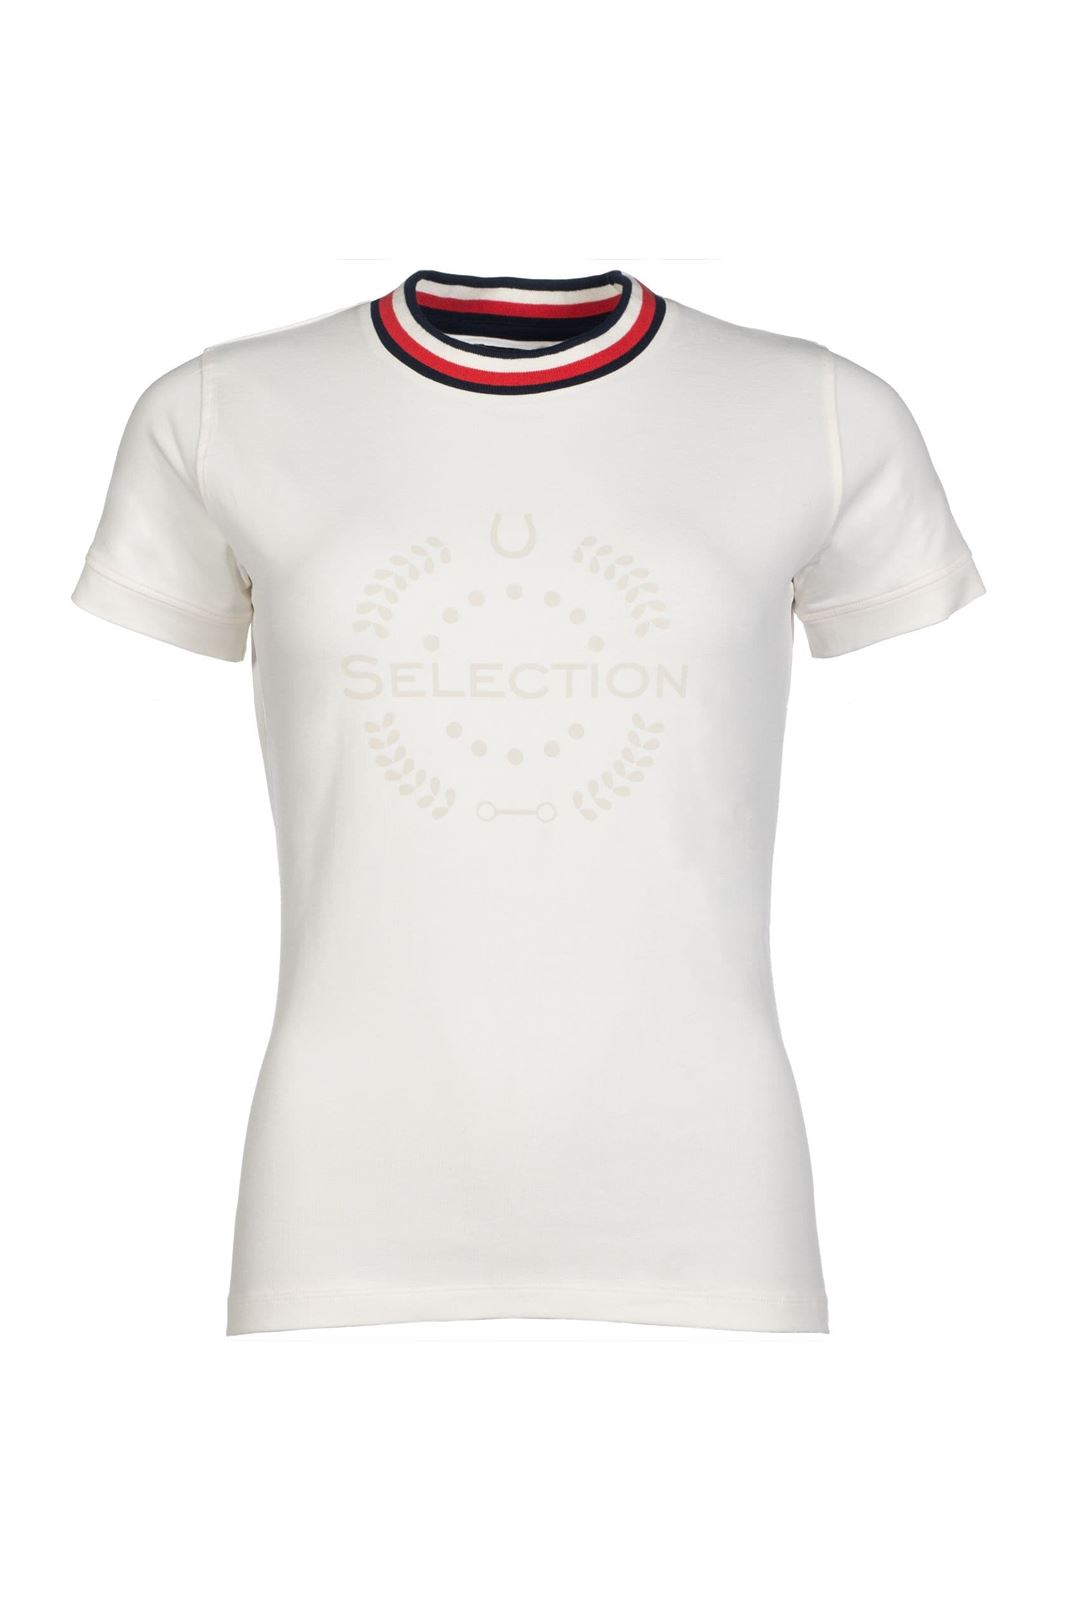 Camiseta HKM Sports Equipment Aruba mujer color beige - Imagen 1